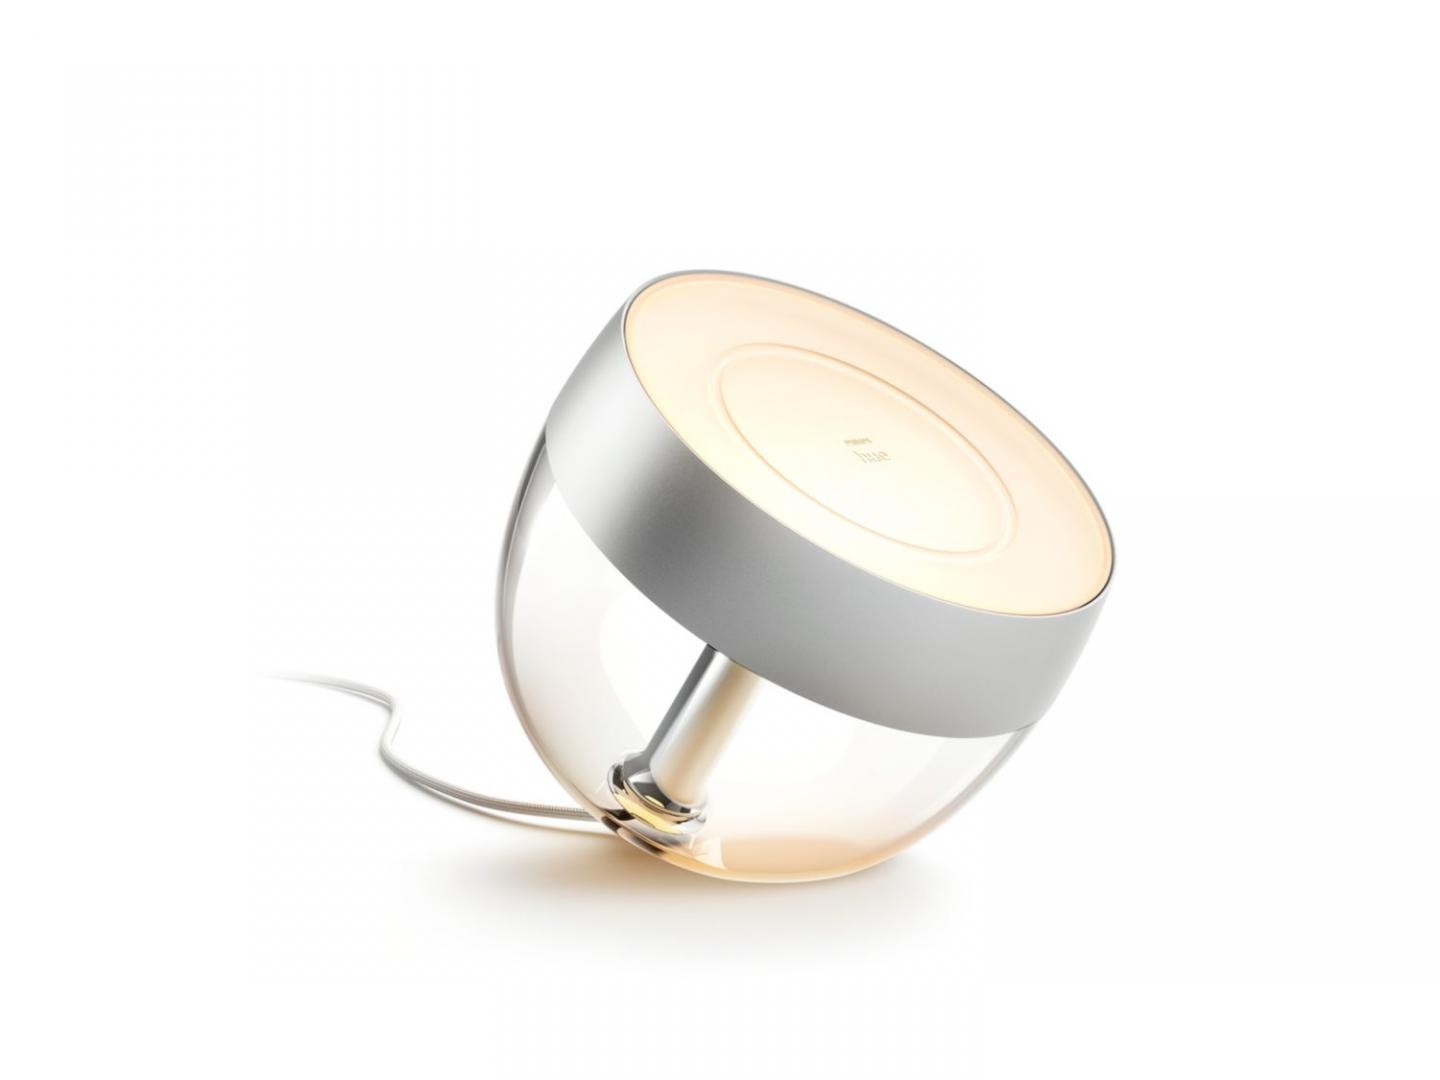 Lampa LED RGB Philips Hue Iris, gen4, Bluetooth, 8.2W, 570 lm, lumina alba si color (2000-6500K), IP20, 20.4cm, Silver